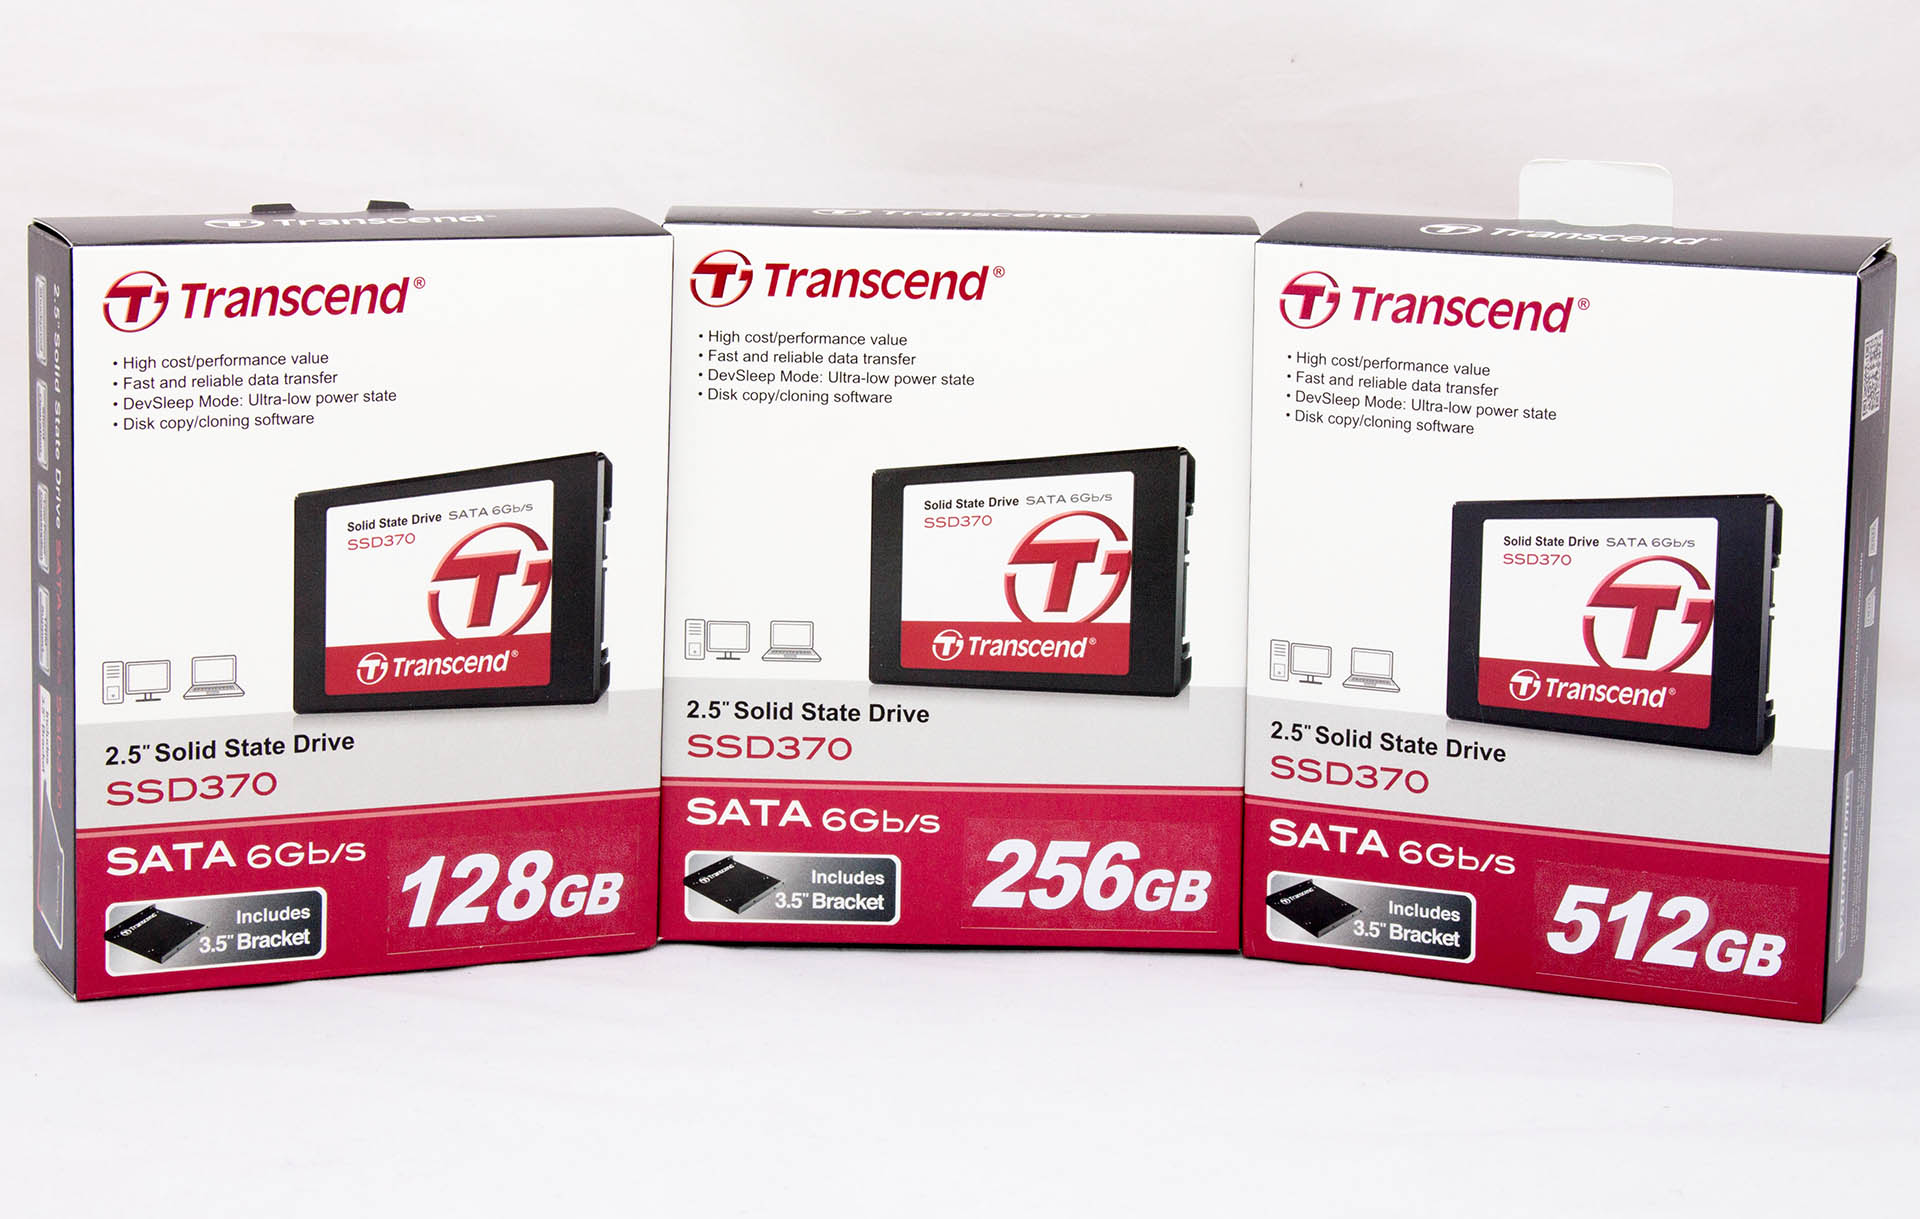 Samsung SSD 850 EVO & Transcend SSD 370 test